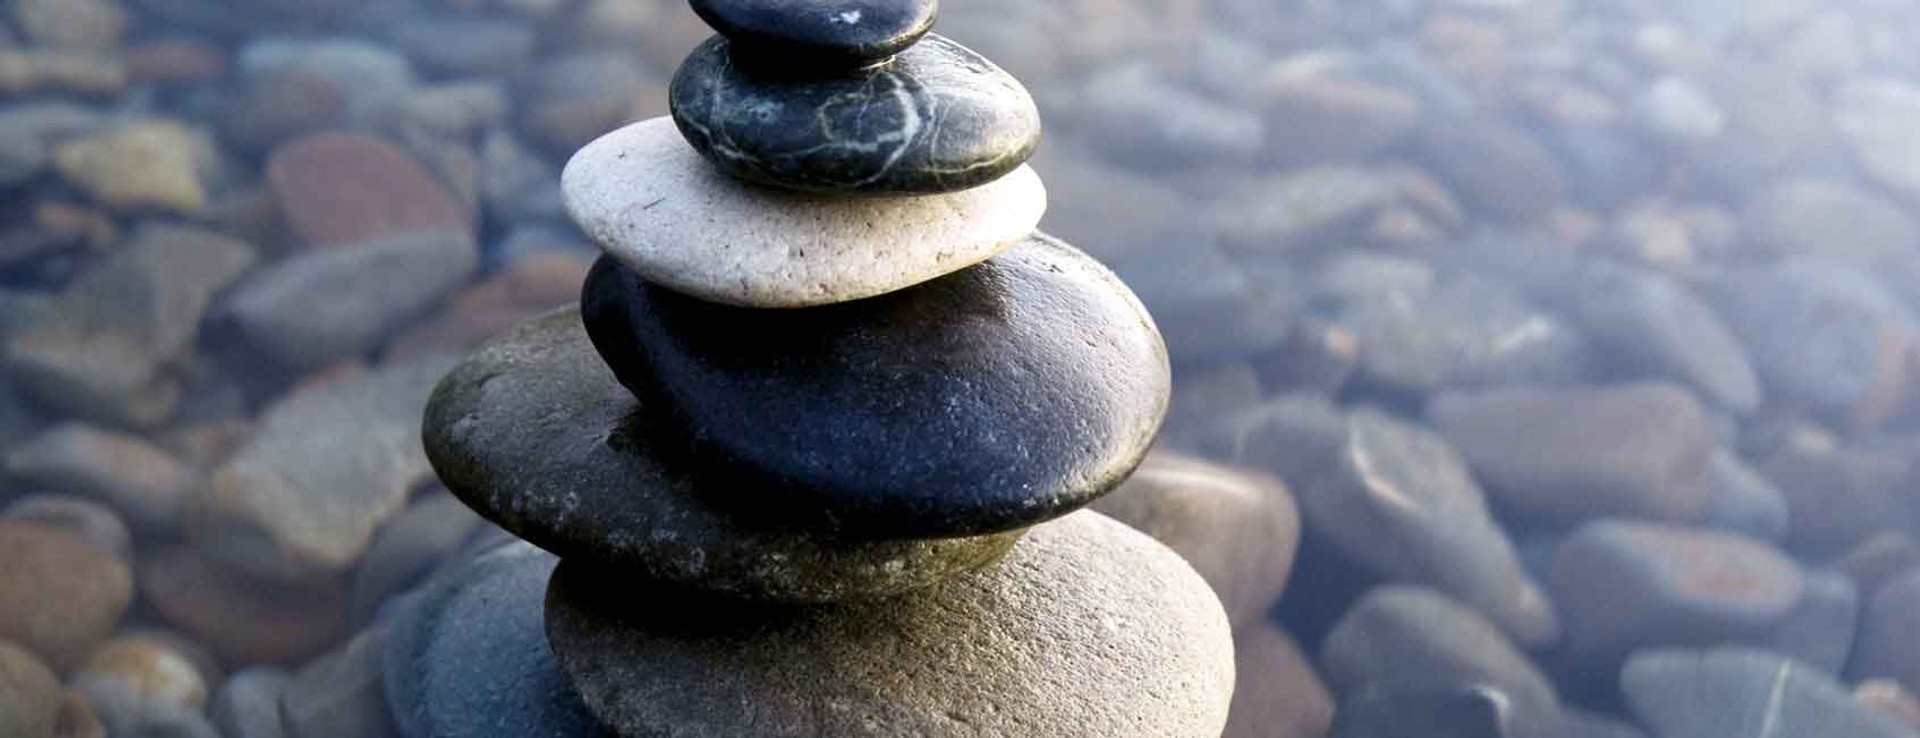 Zen rocks stack in shallow water